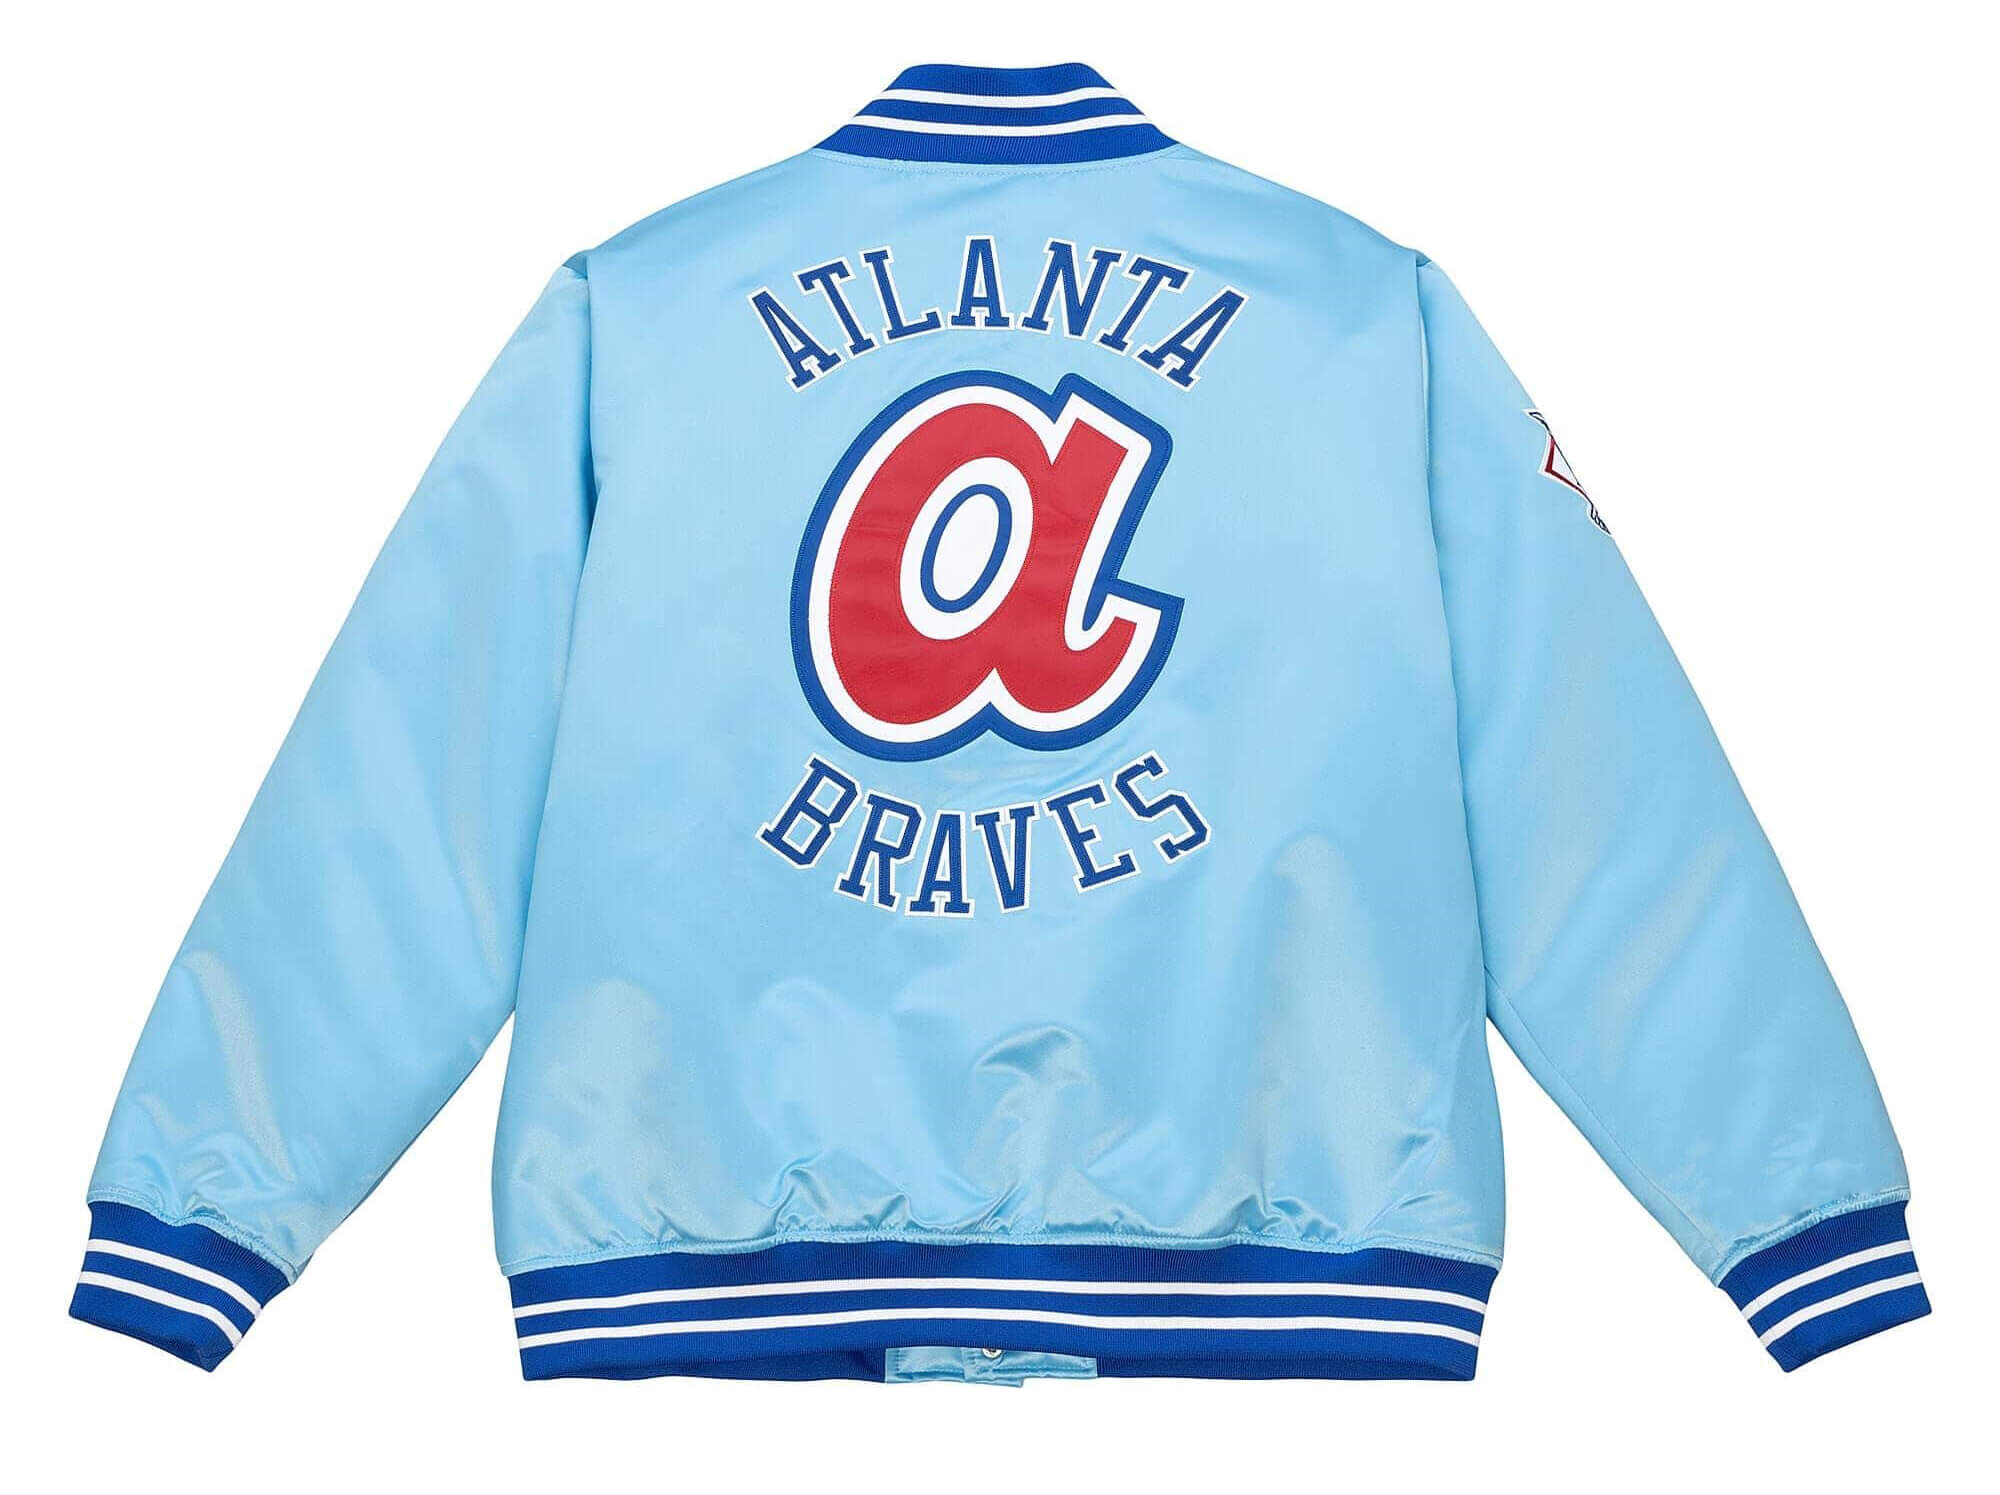 Atlanta Braves Jersey By Starter XL (Fits Smaller) (X)